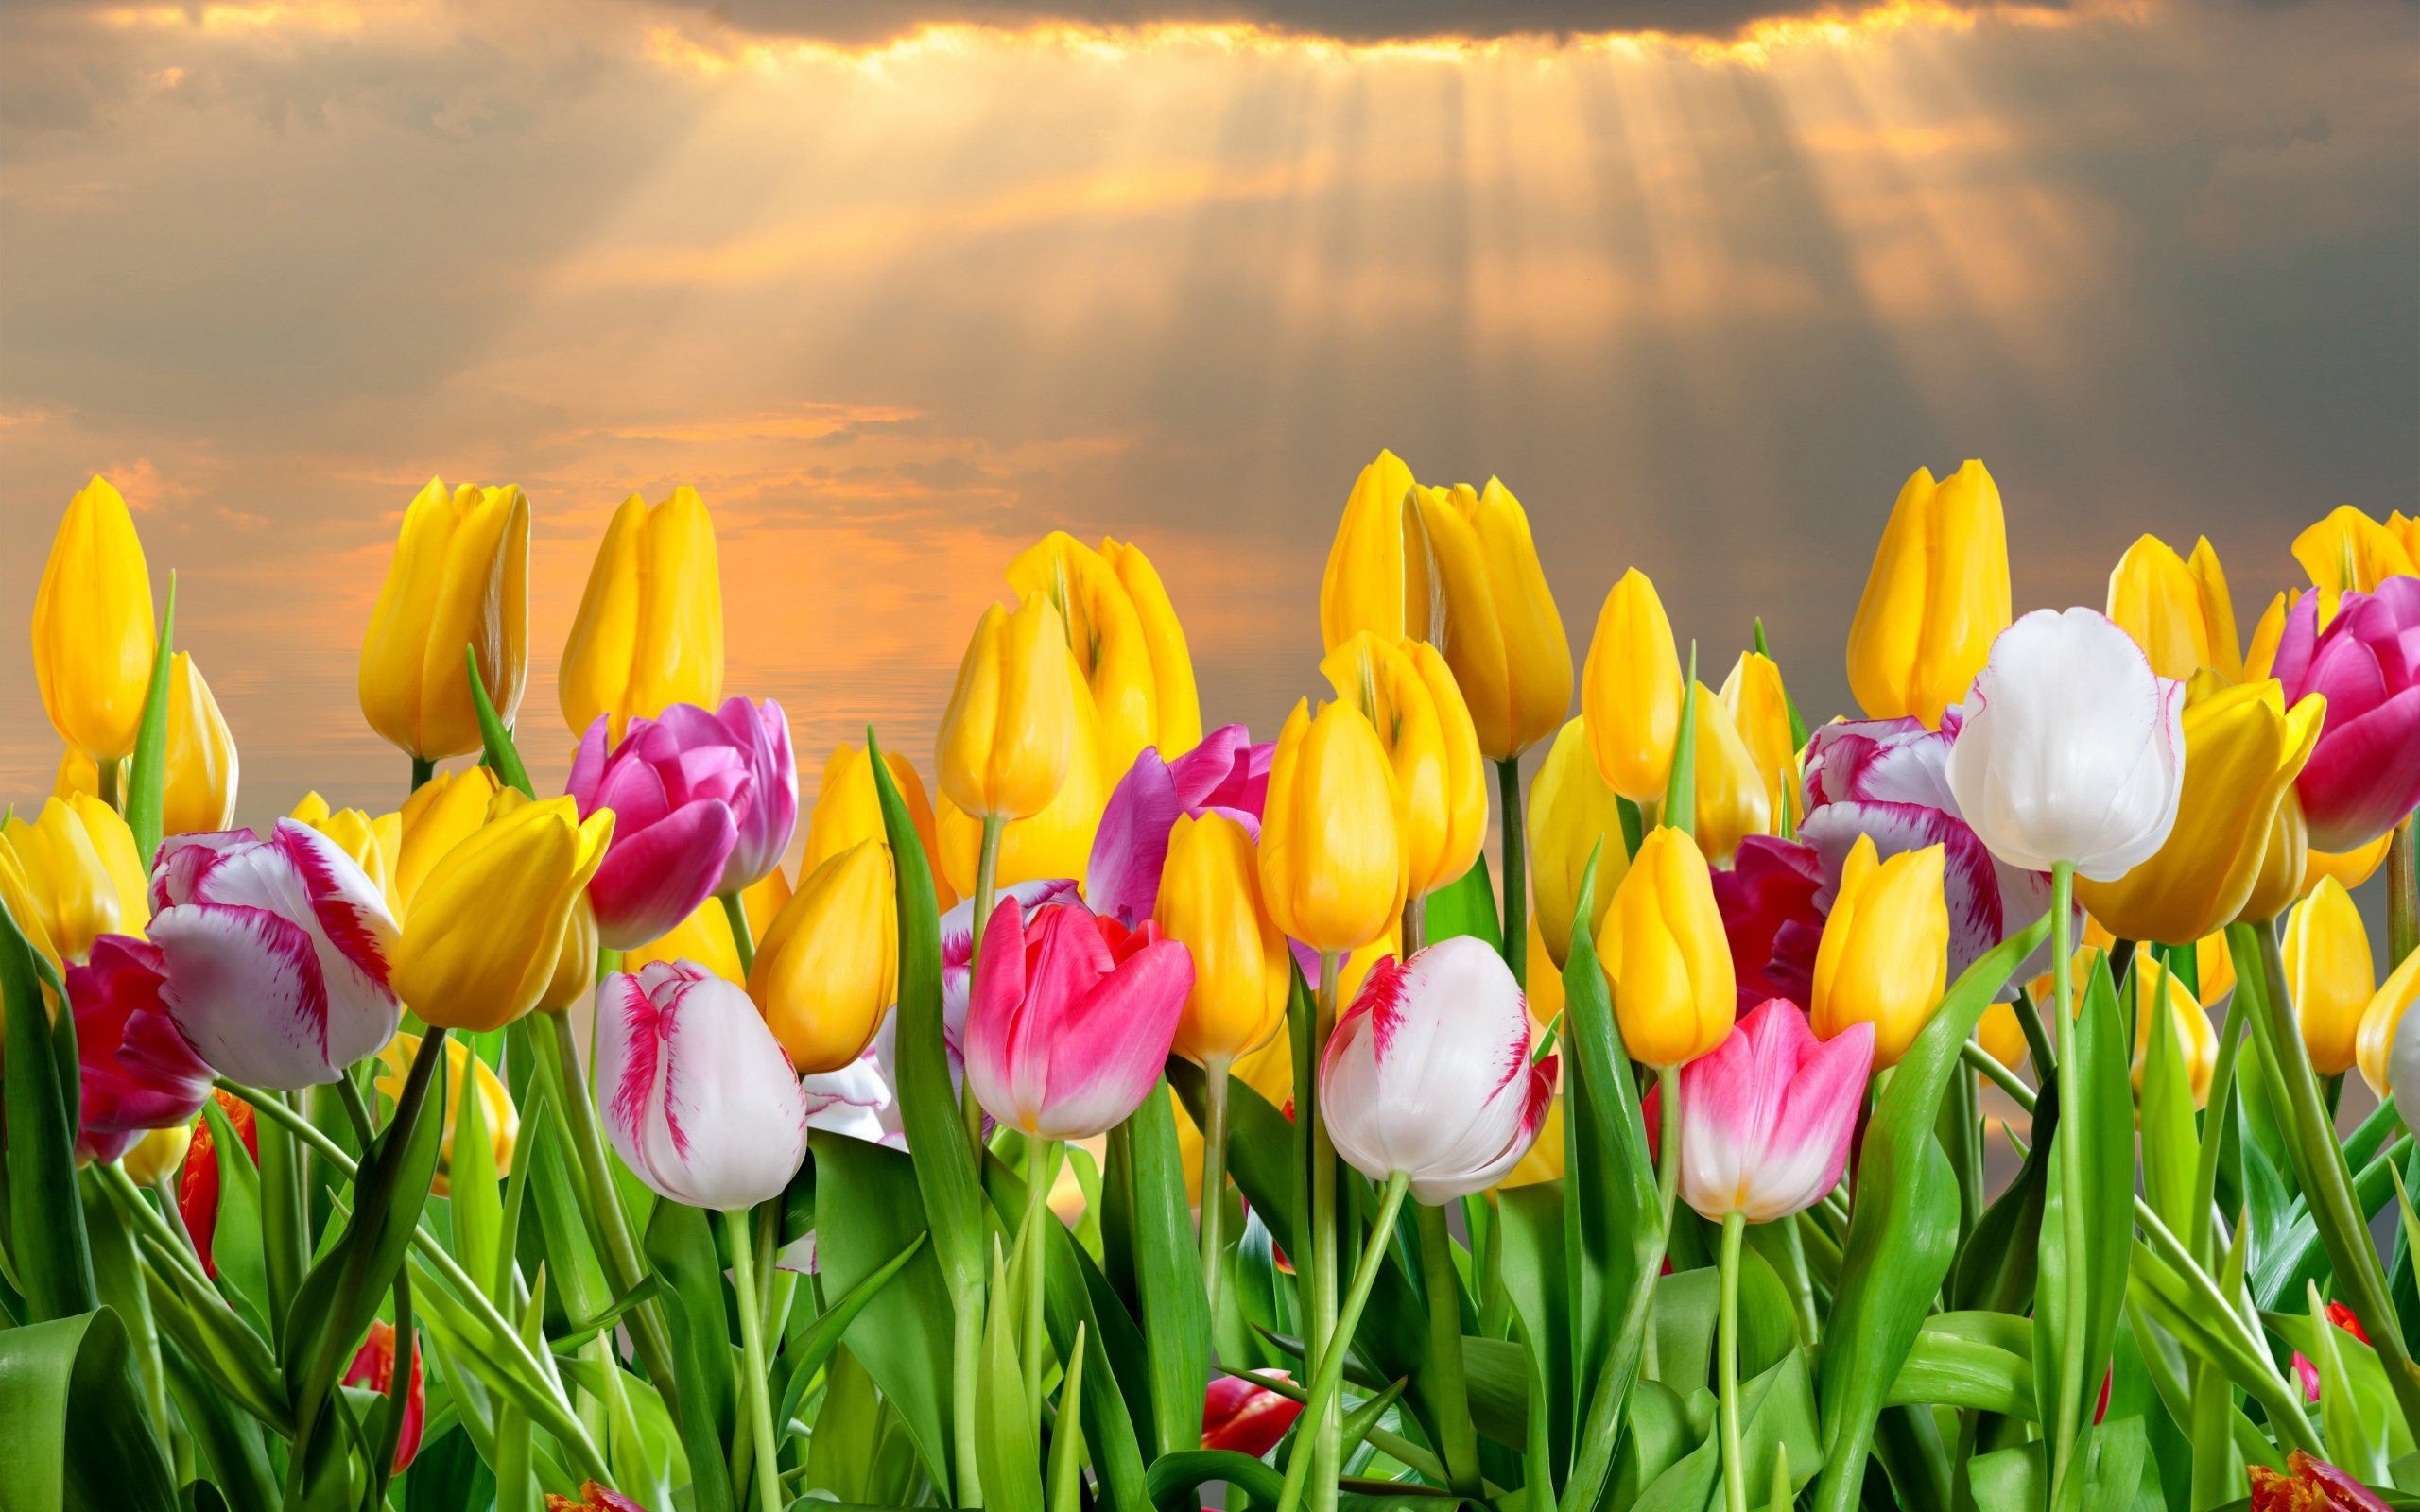 2560x1600, Tulips Flowers Wallpaper For Desktop, Laptop - Tulips Flower Background - HD Wallpaper 